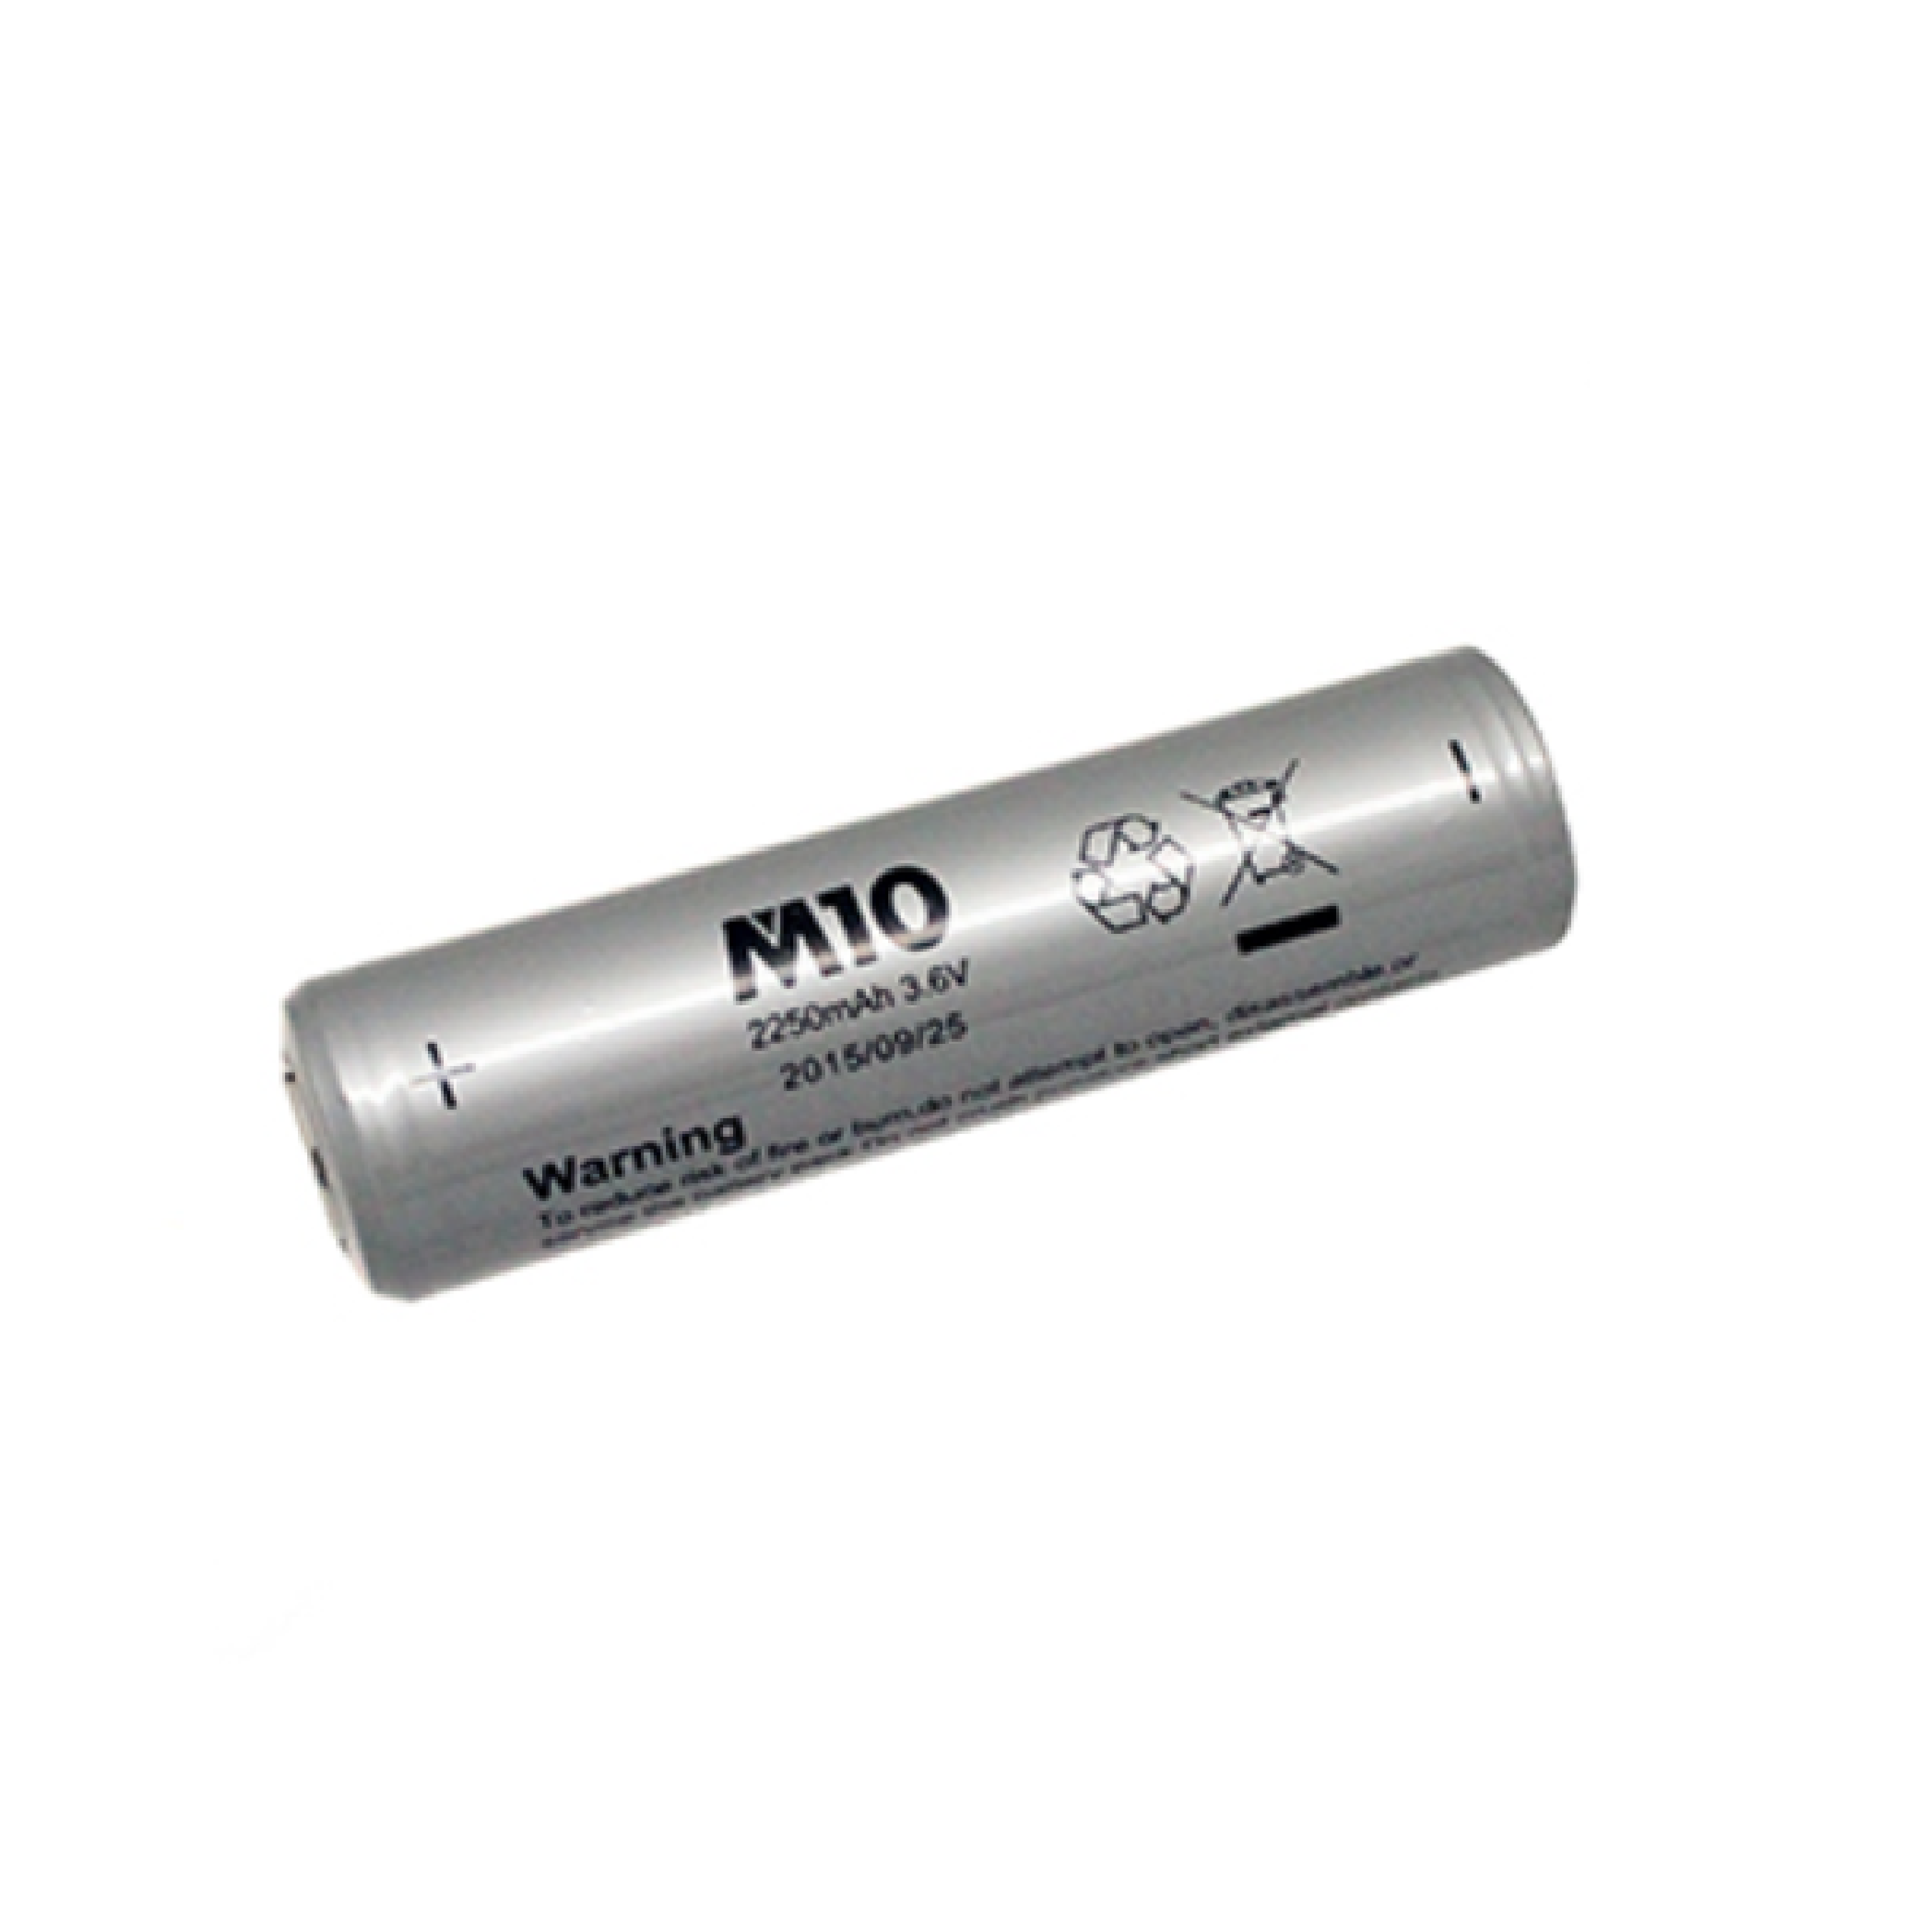 M10 18650 3.6V Rechargeable 2250mAh LI-ION Battery